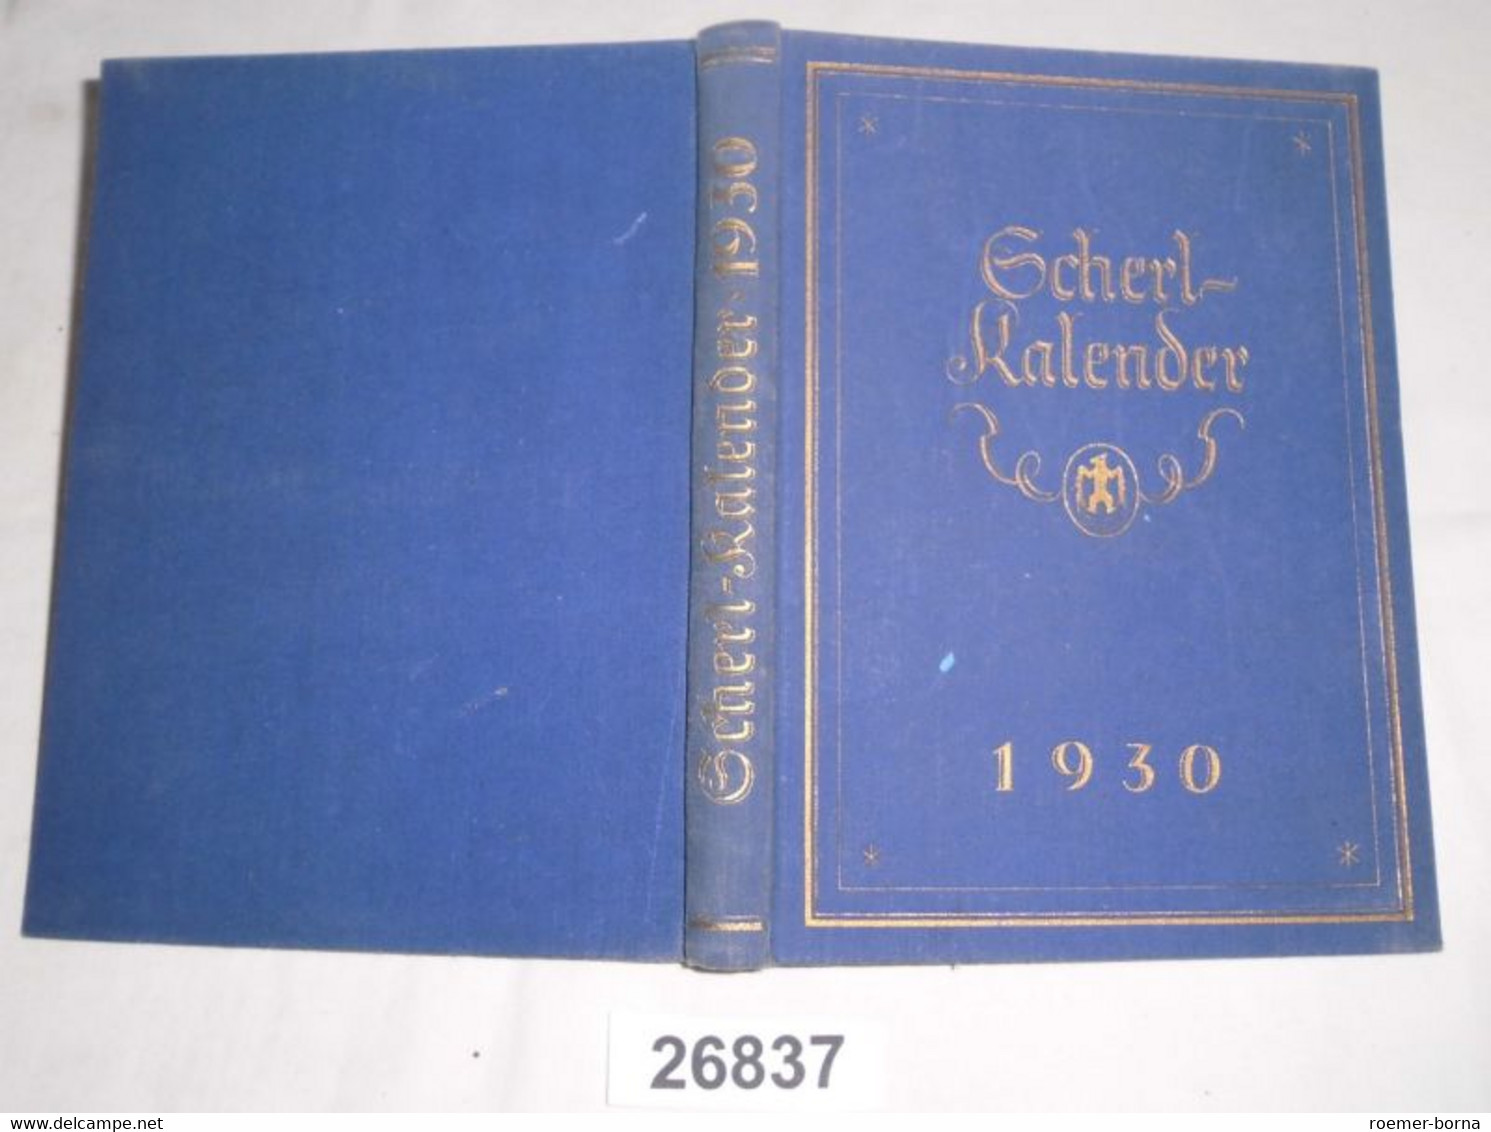 Scherl-Kalender 1930 - Calendari